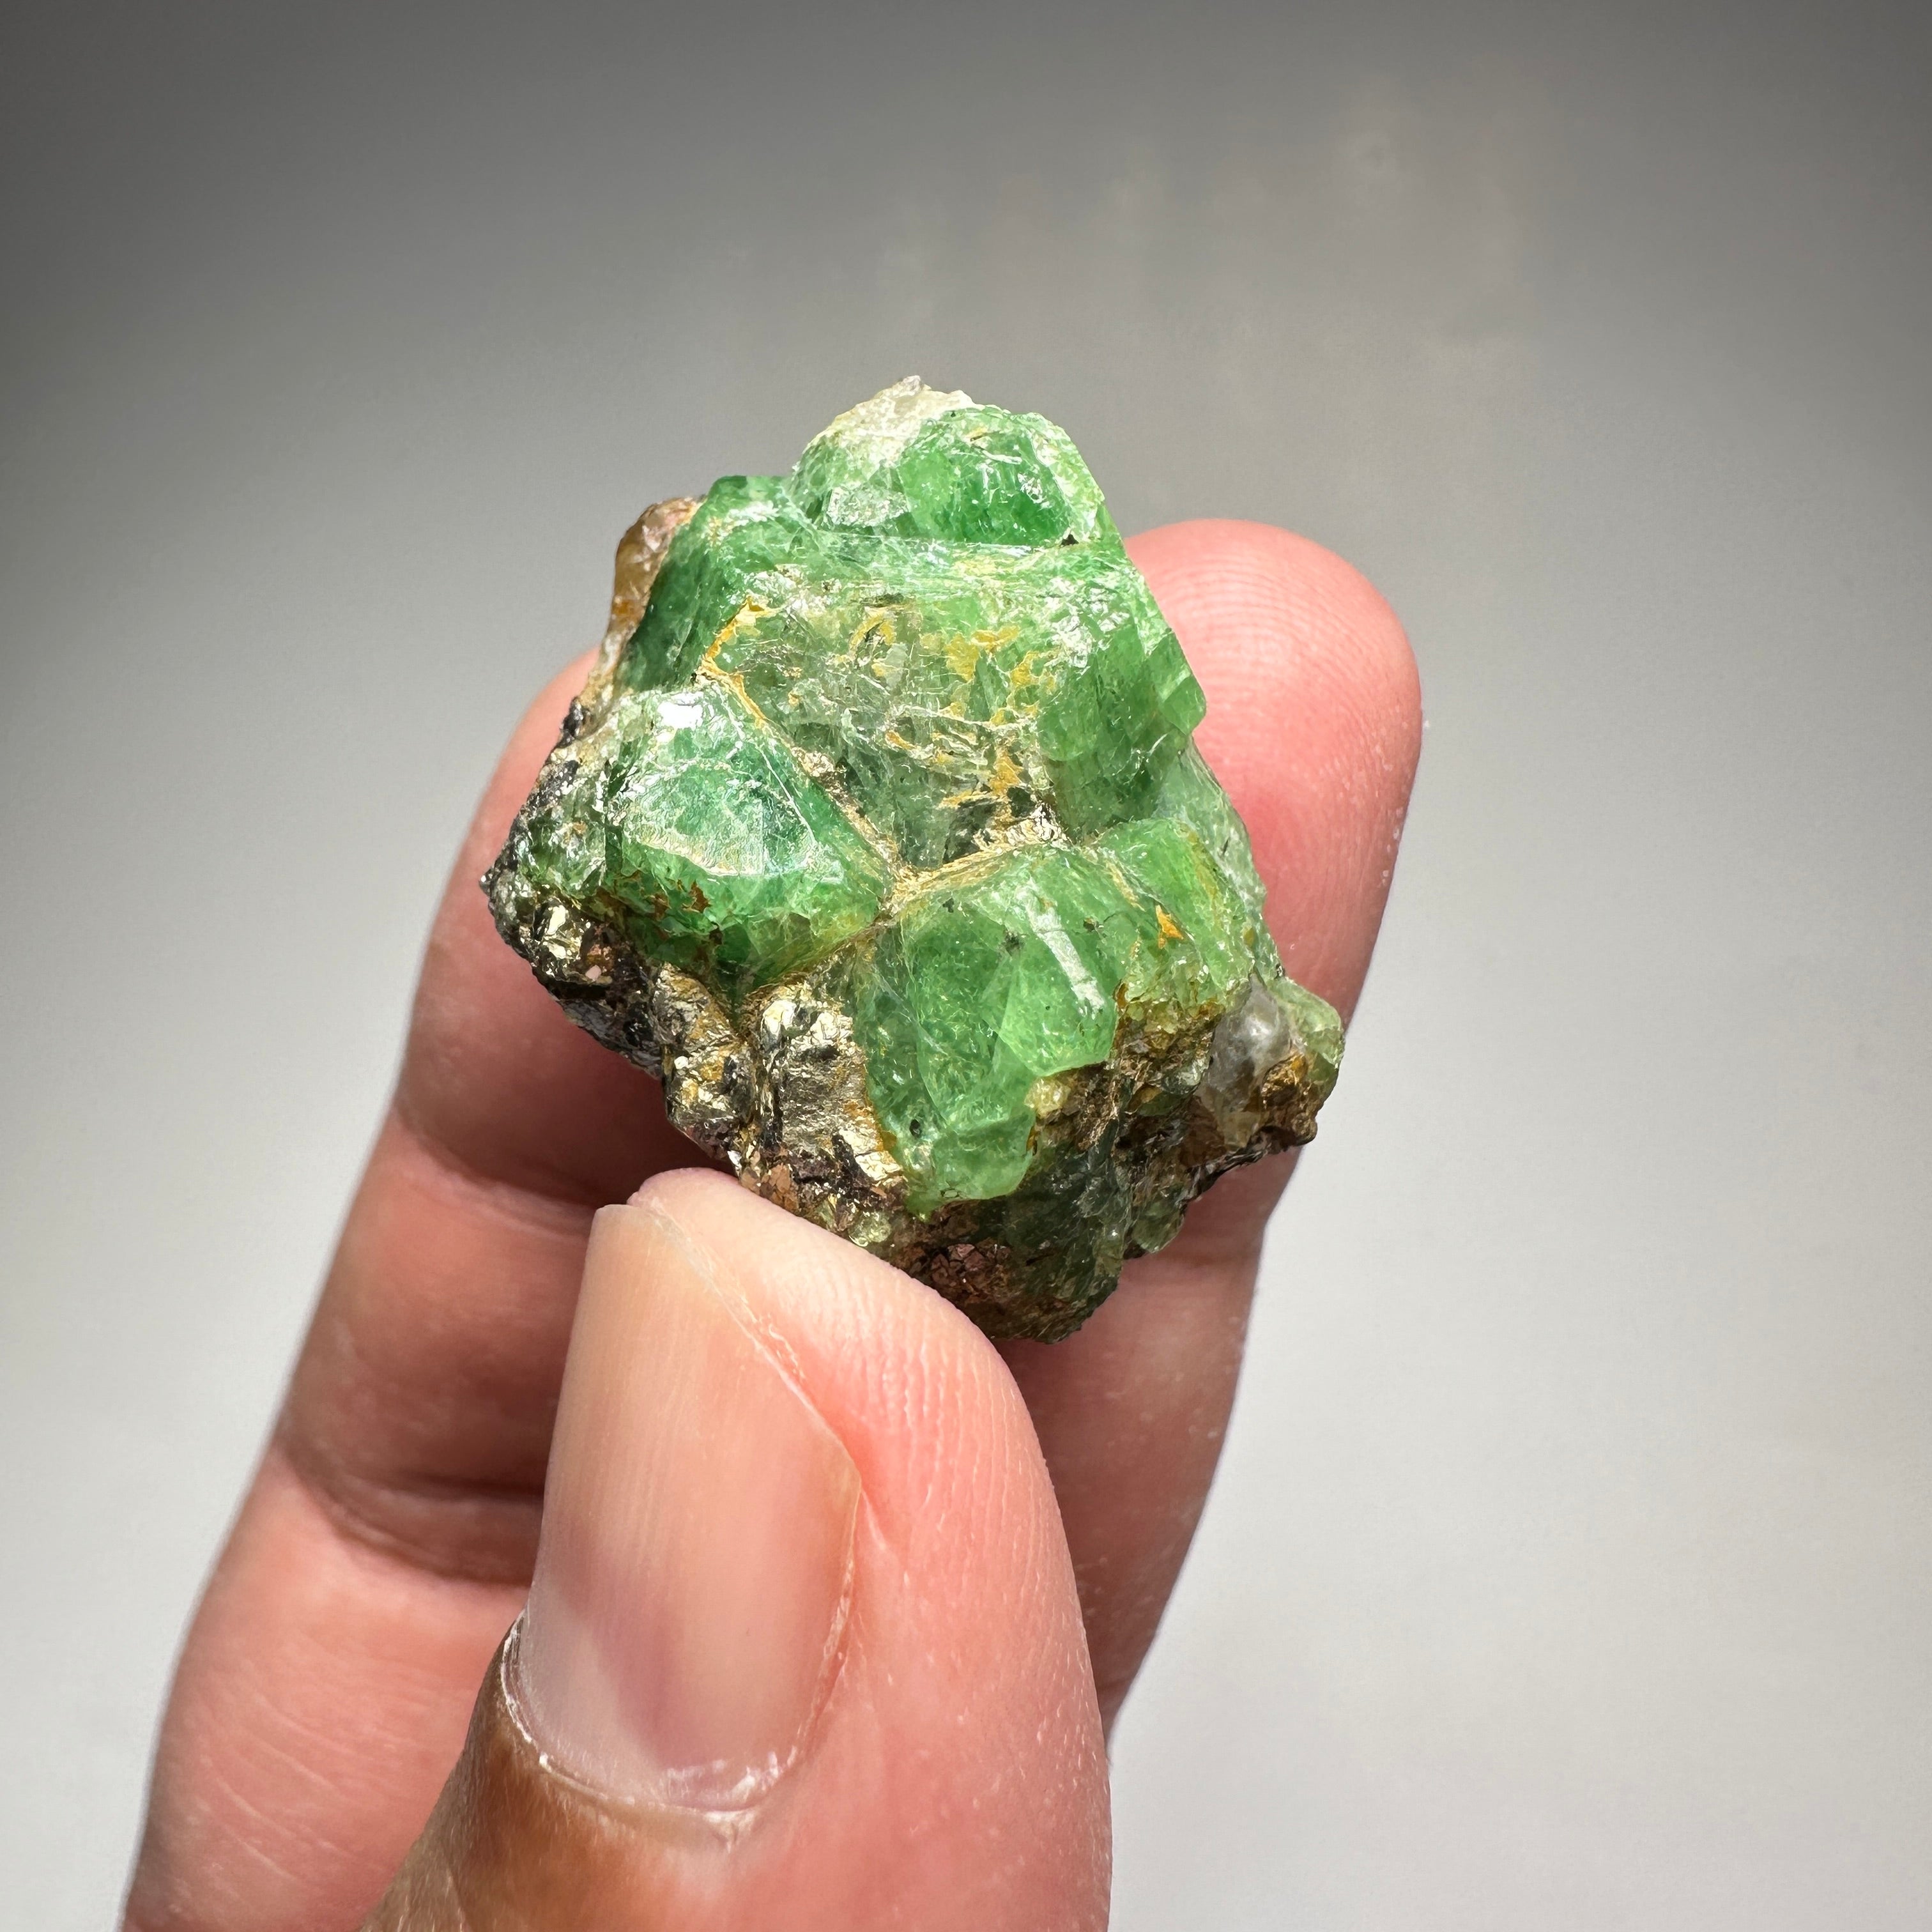 24.50gm / 122.50ct Tsavorite Crystal With Tanzanite And Pyrite on Matrix, Merelani, Tanzania. 28 x 22 x 21mm